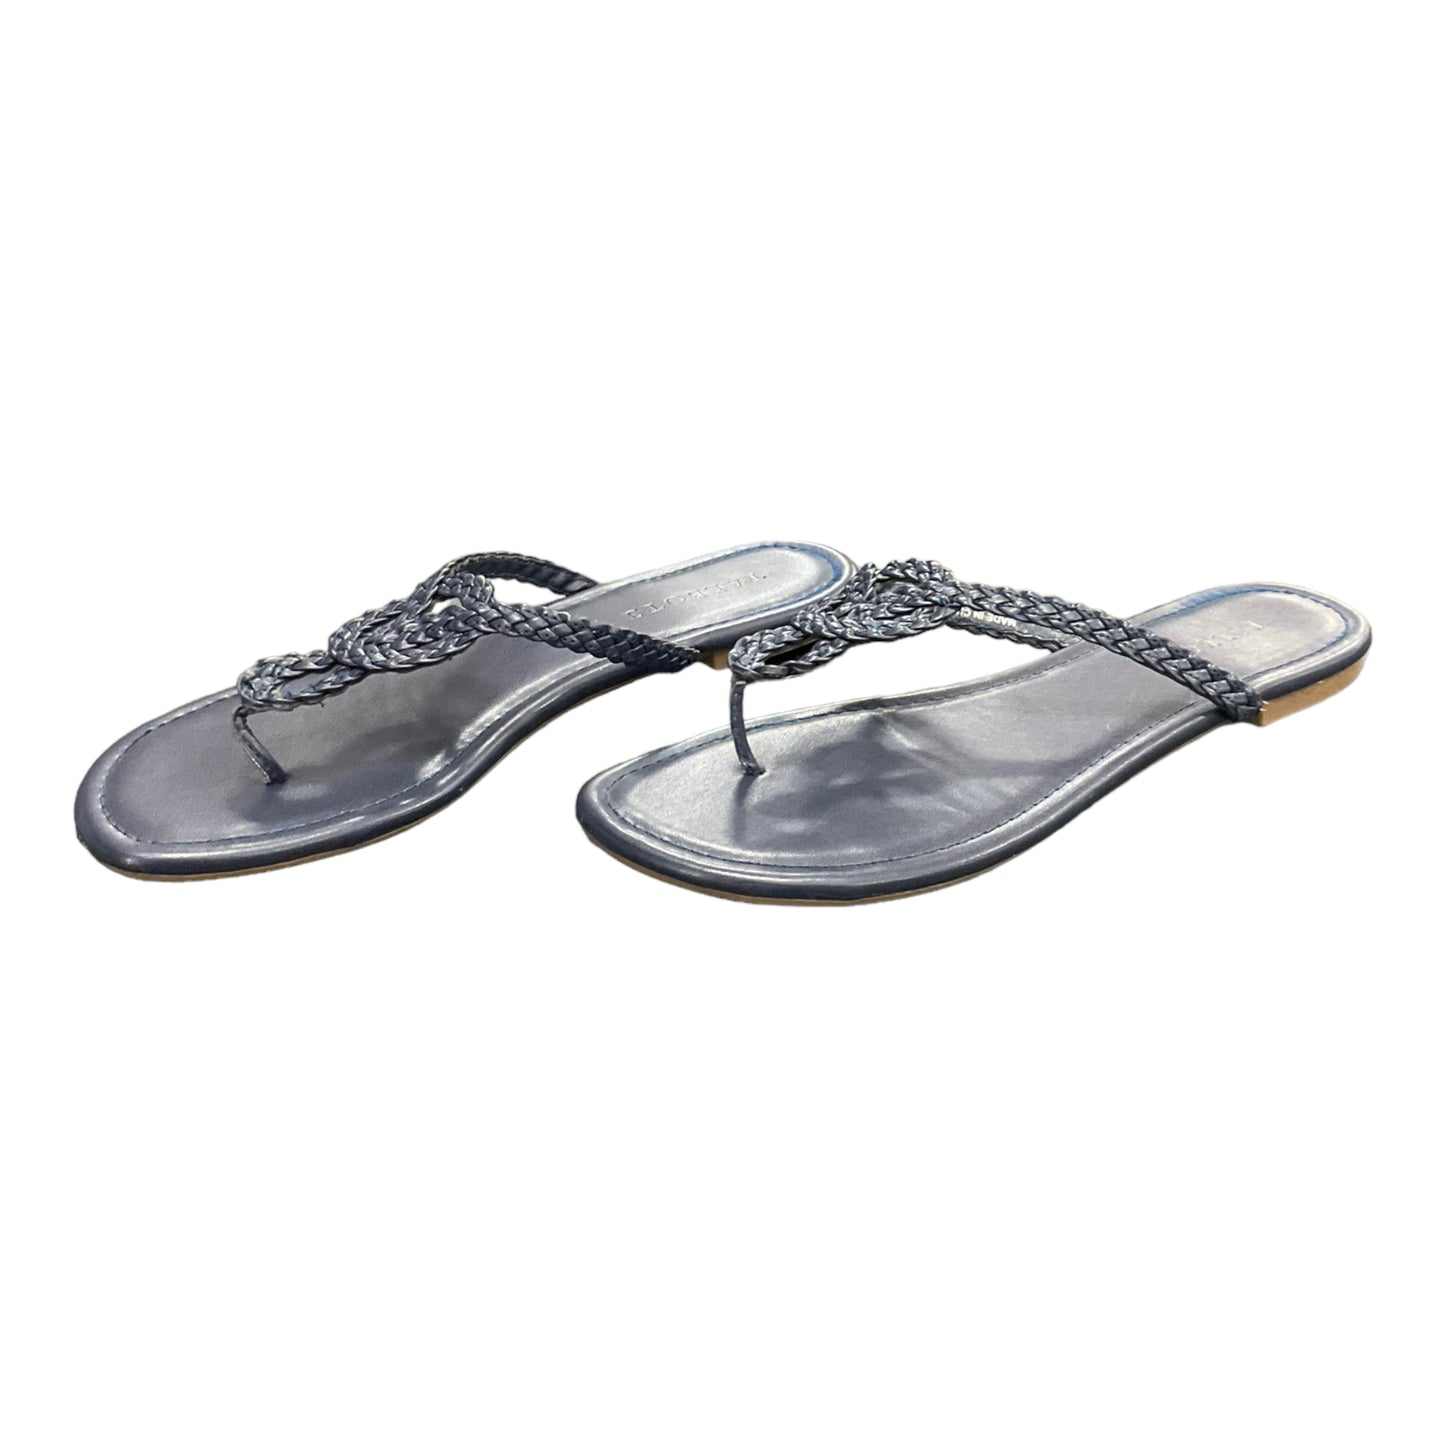 Sandals Flip Flops By Talbots  Size: 7